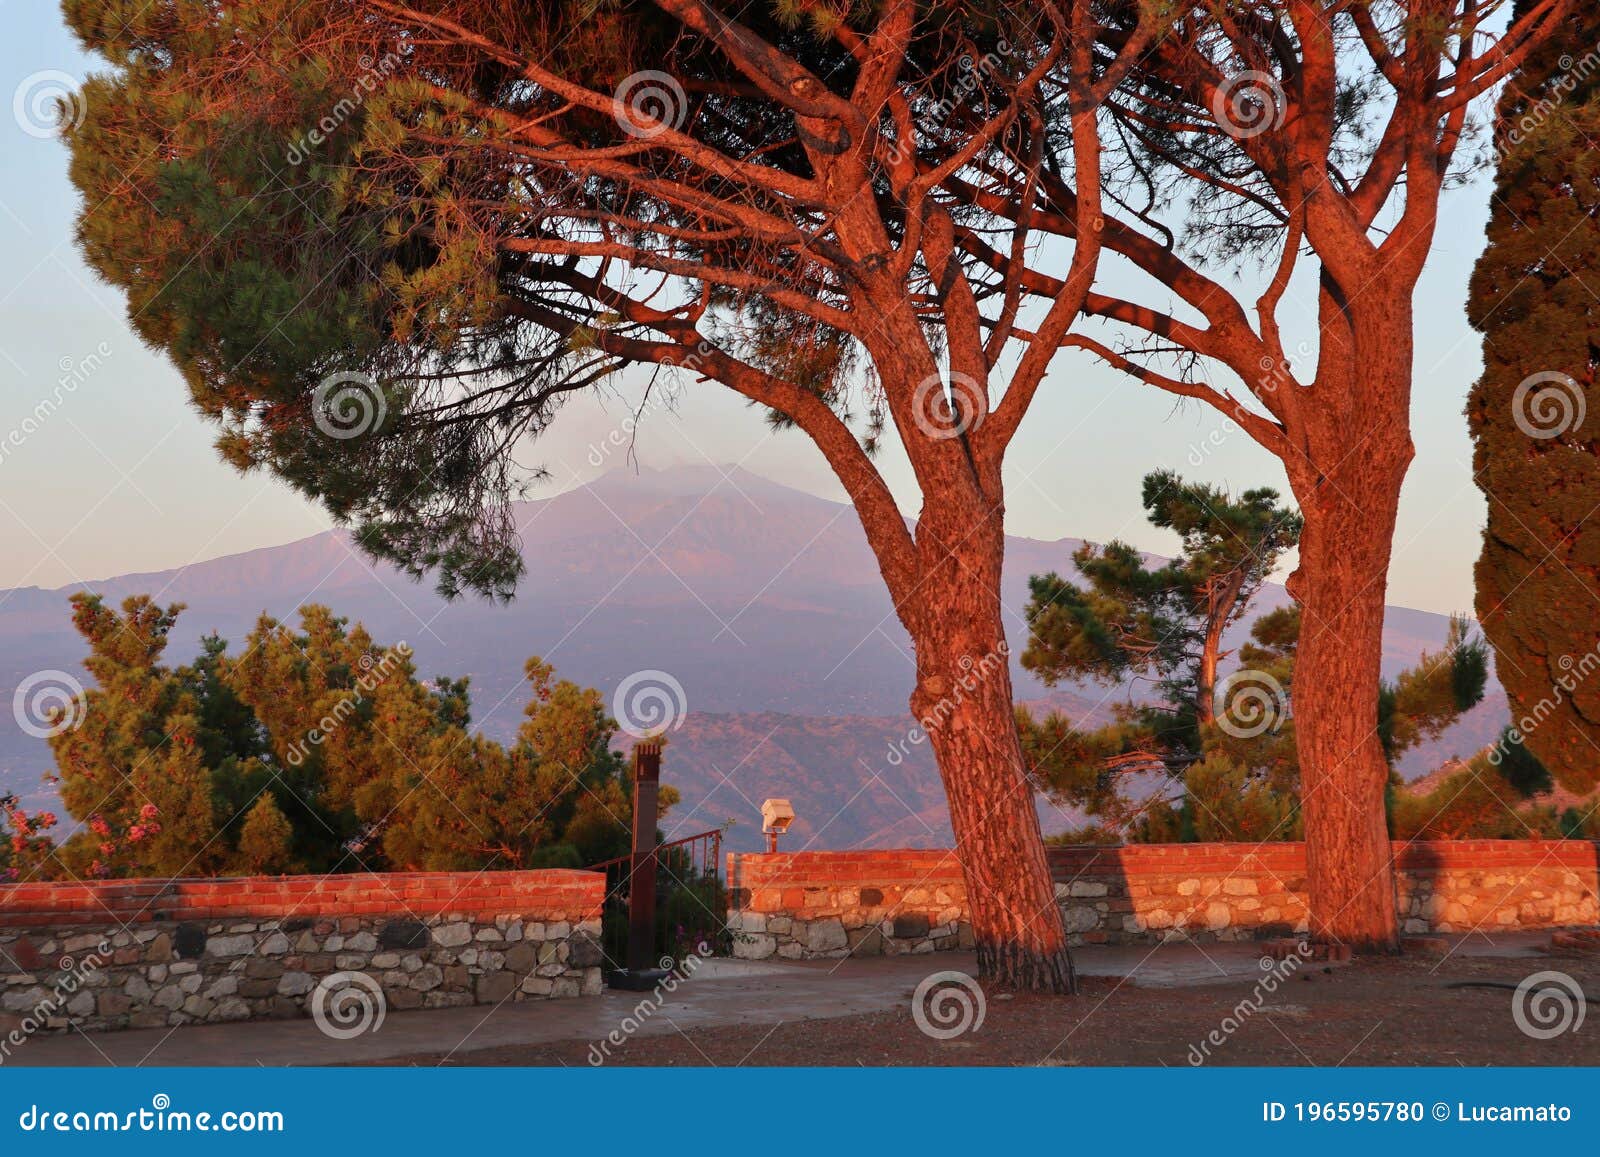 castelmola - alberi del castello all`alba